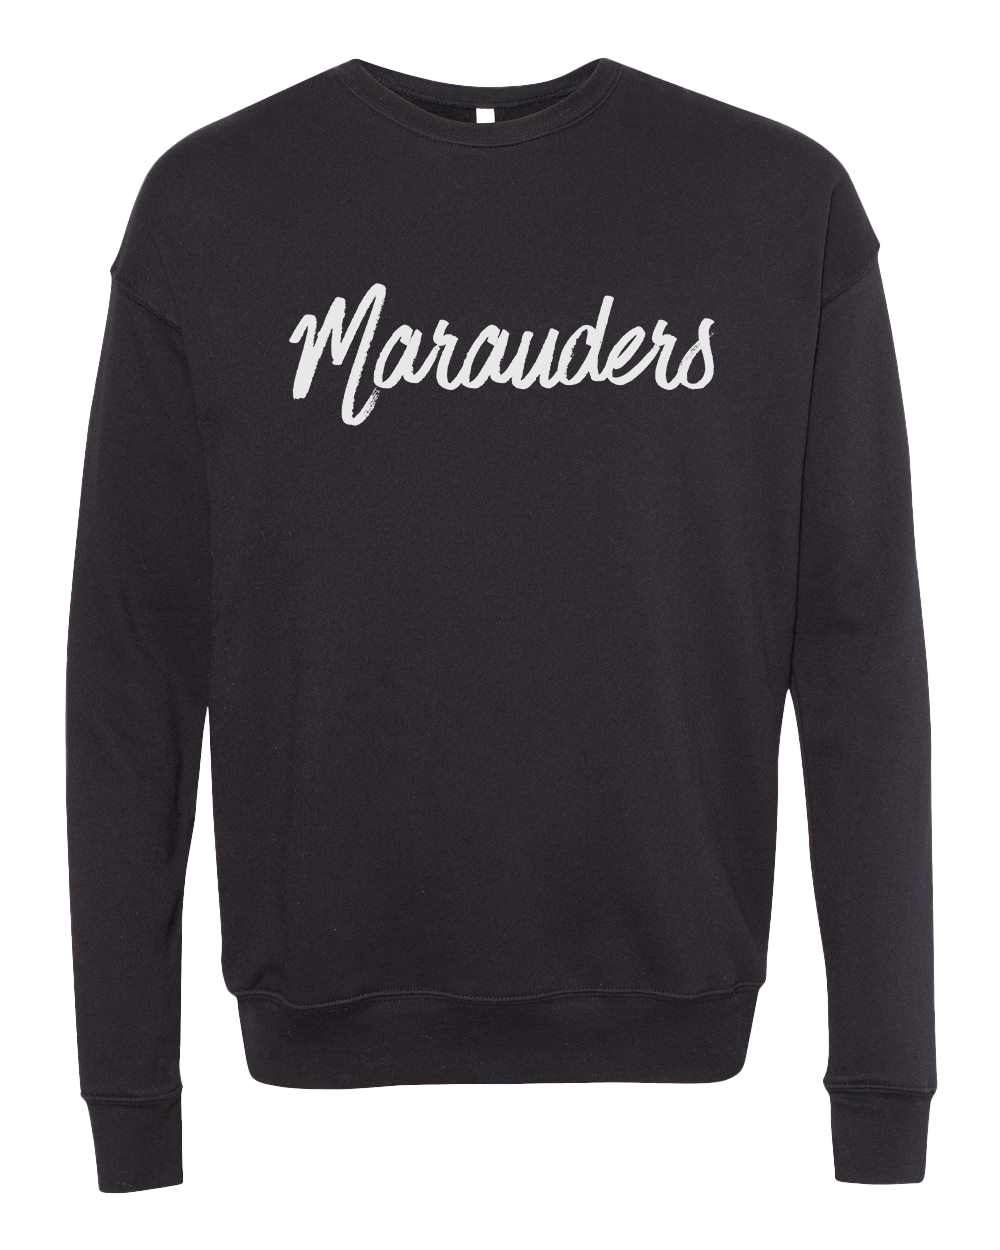 Mt. Vernon Marauders Crew Sweatshirt - Black